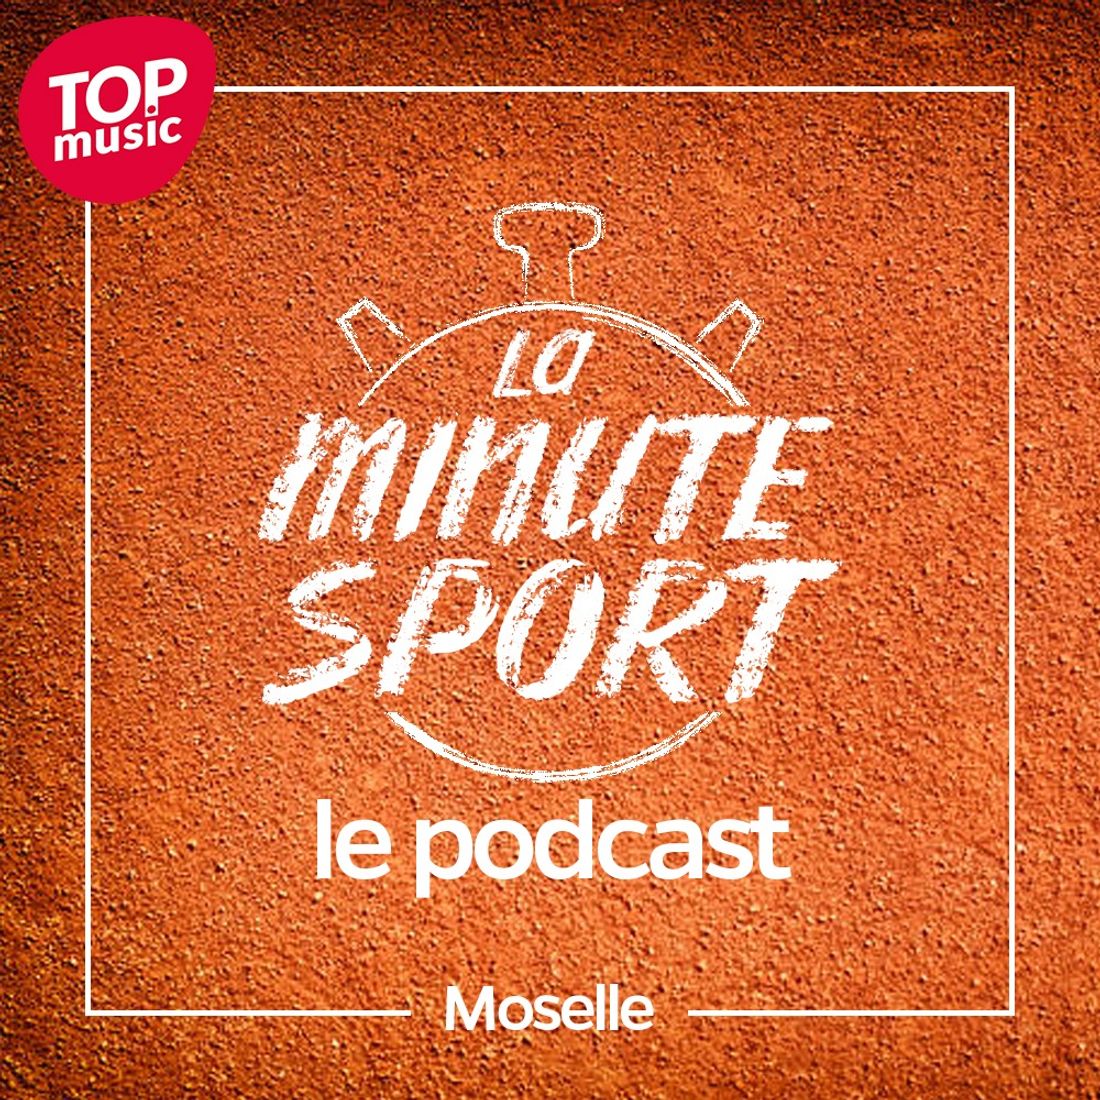 La Minute Sport - Moselle - EP8